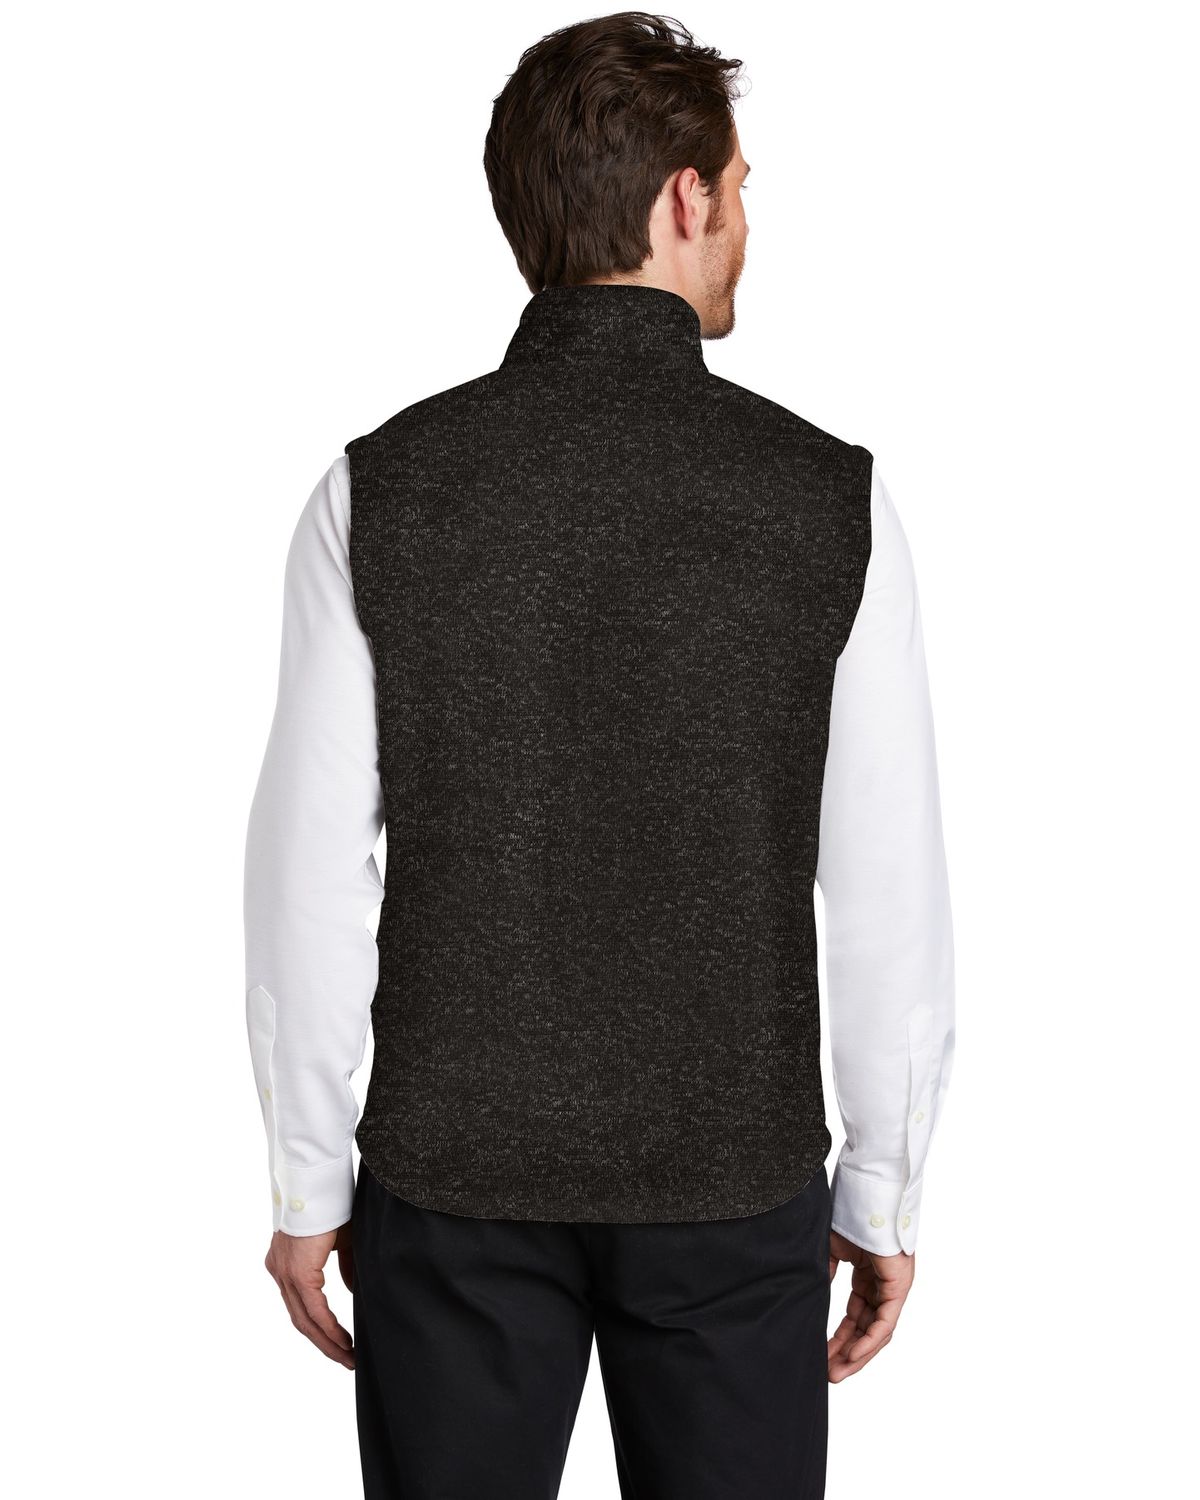 'Port Authority F236 Sweater Fleece Vest'